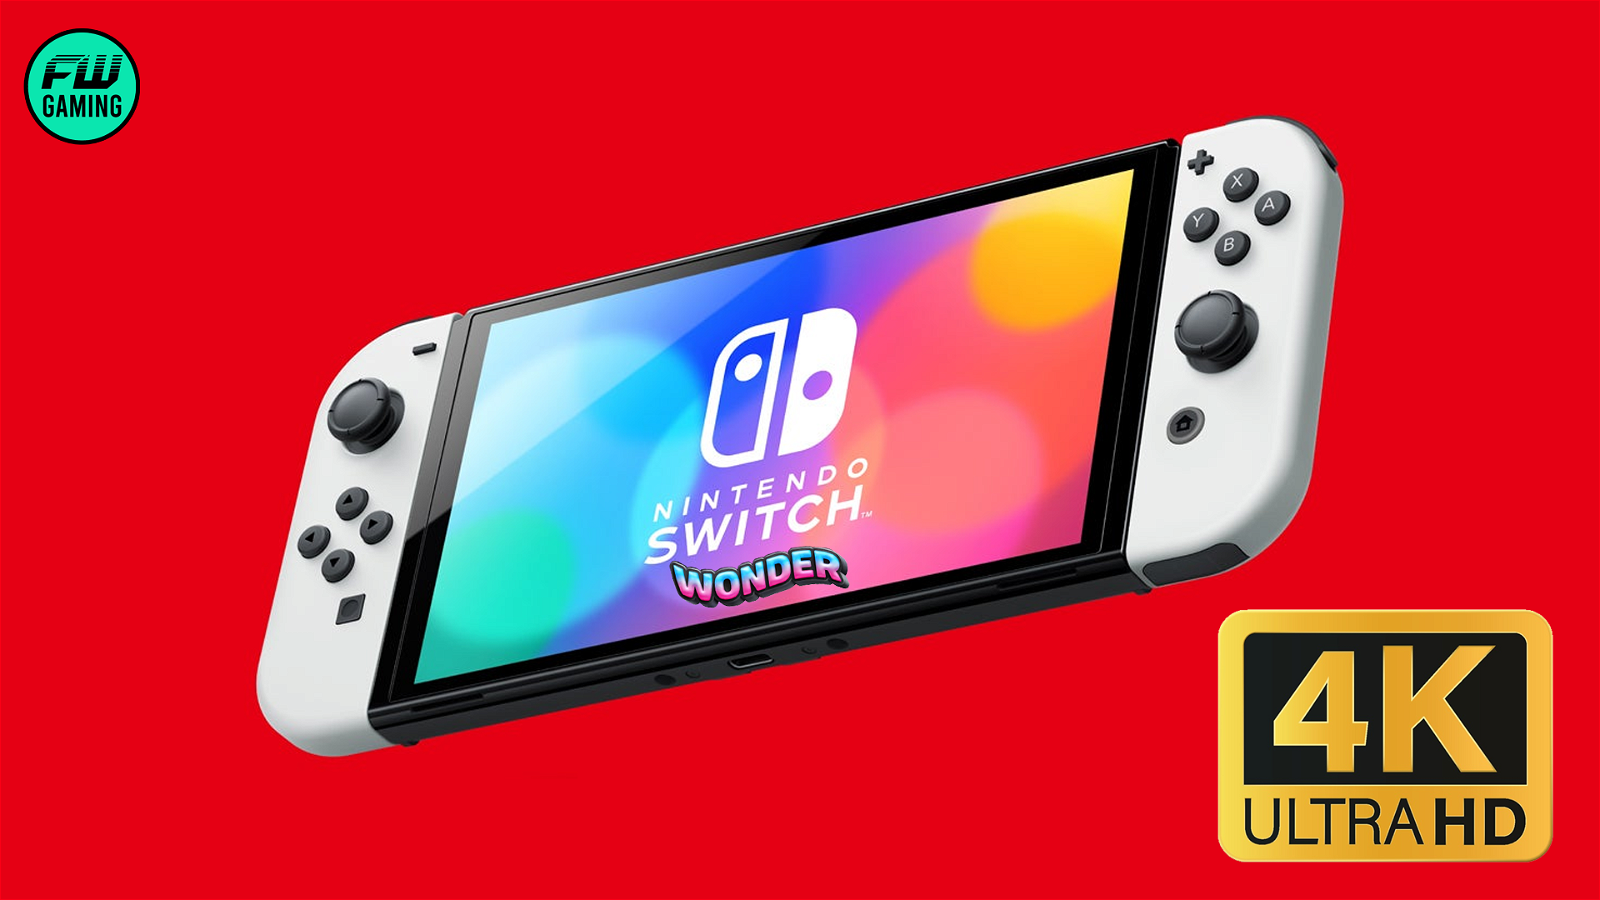 Rumor: Nintendo's Next Console Will Be Called Nintendo Switch Wonder